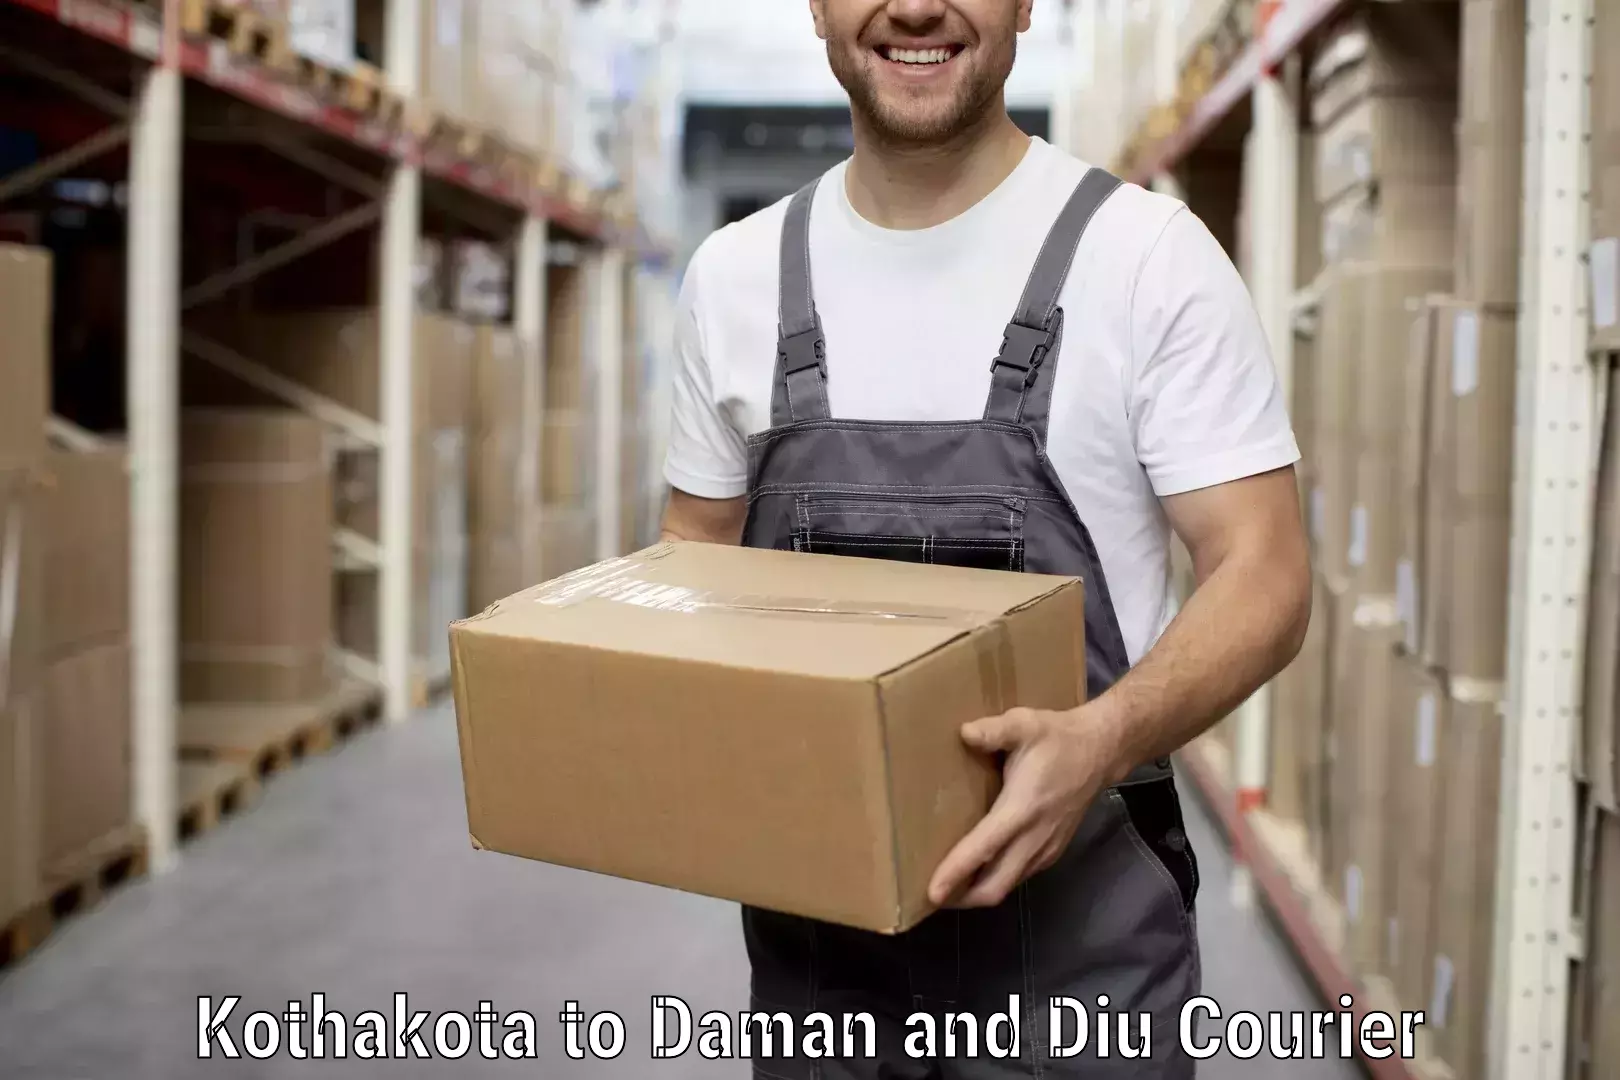 Furniture delivery service Kothakota to Daman and Diu